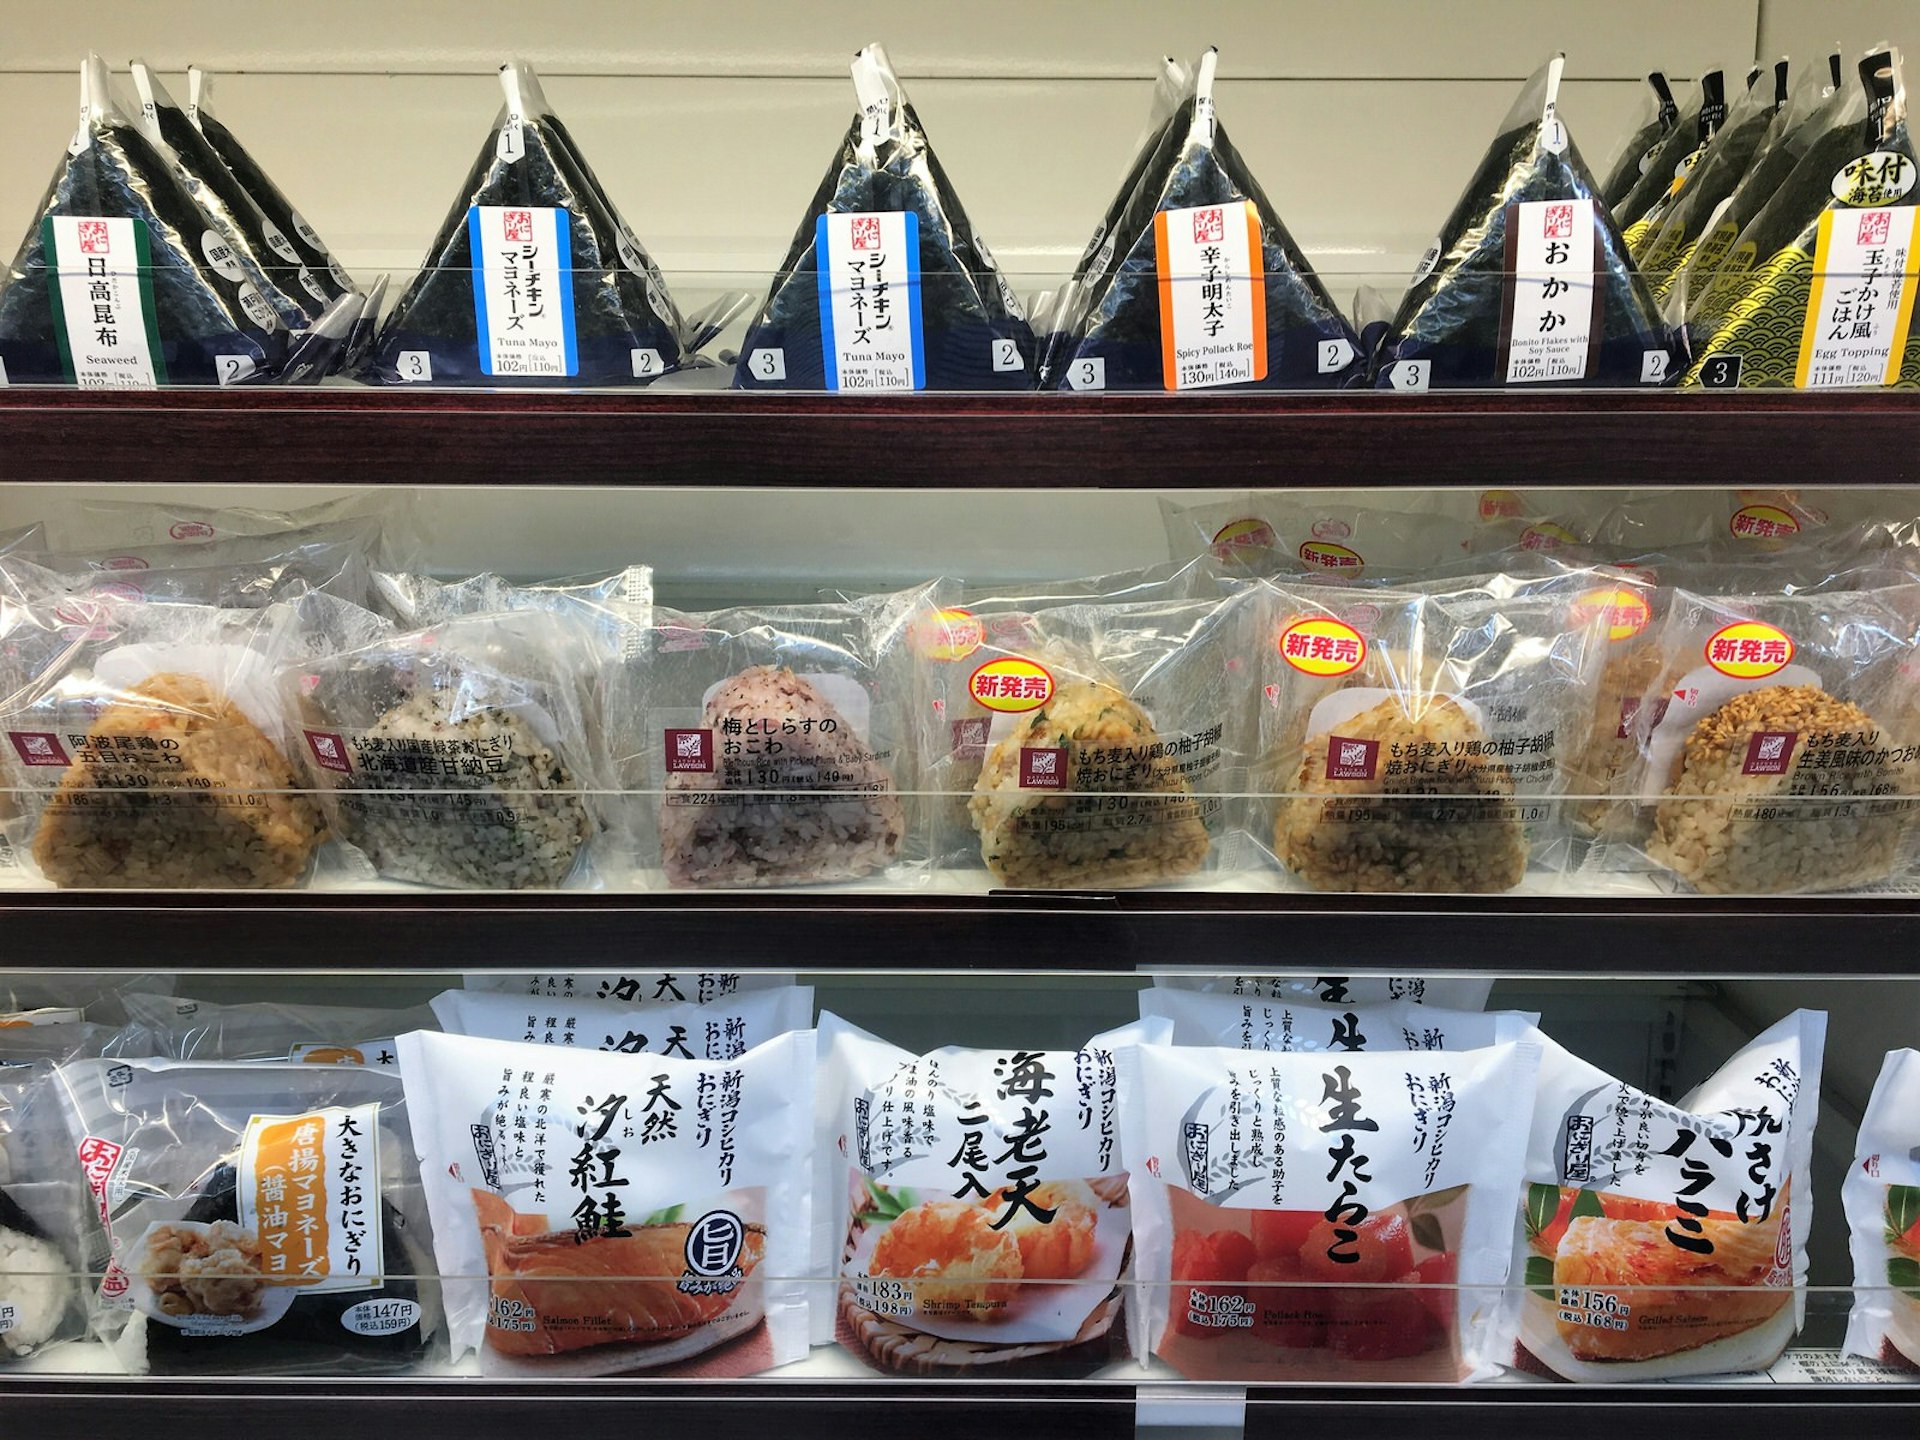 Onigiri (rice balls) on display at Natural Lawson convenience store